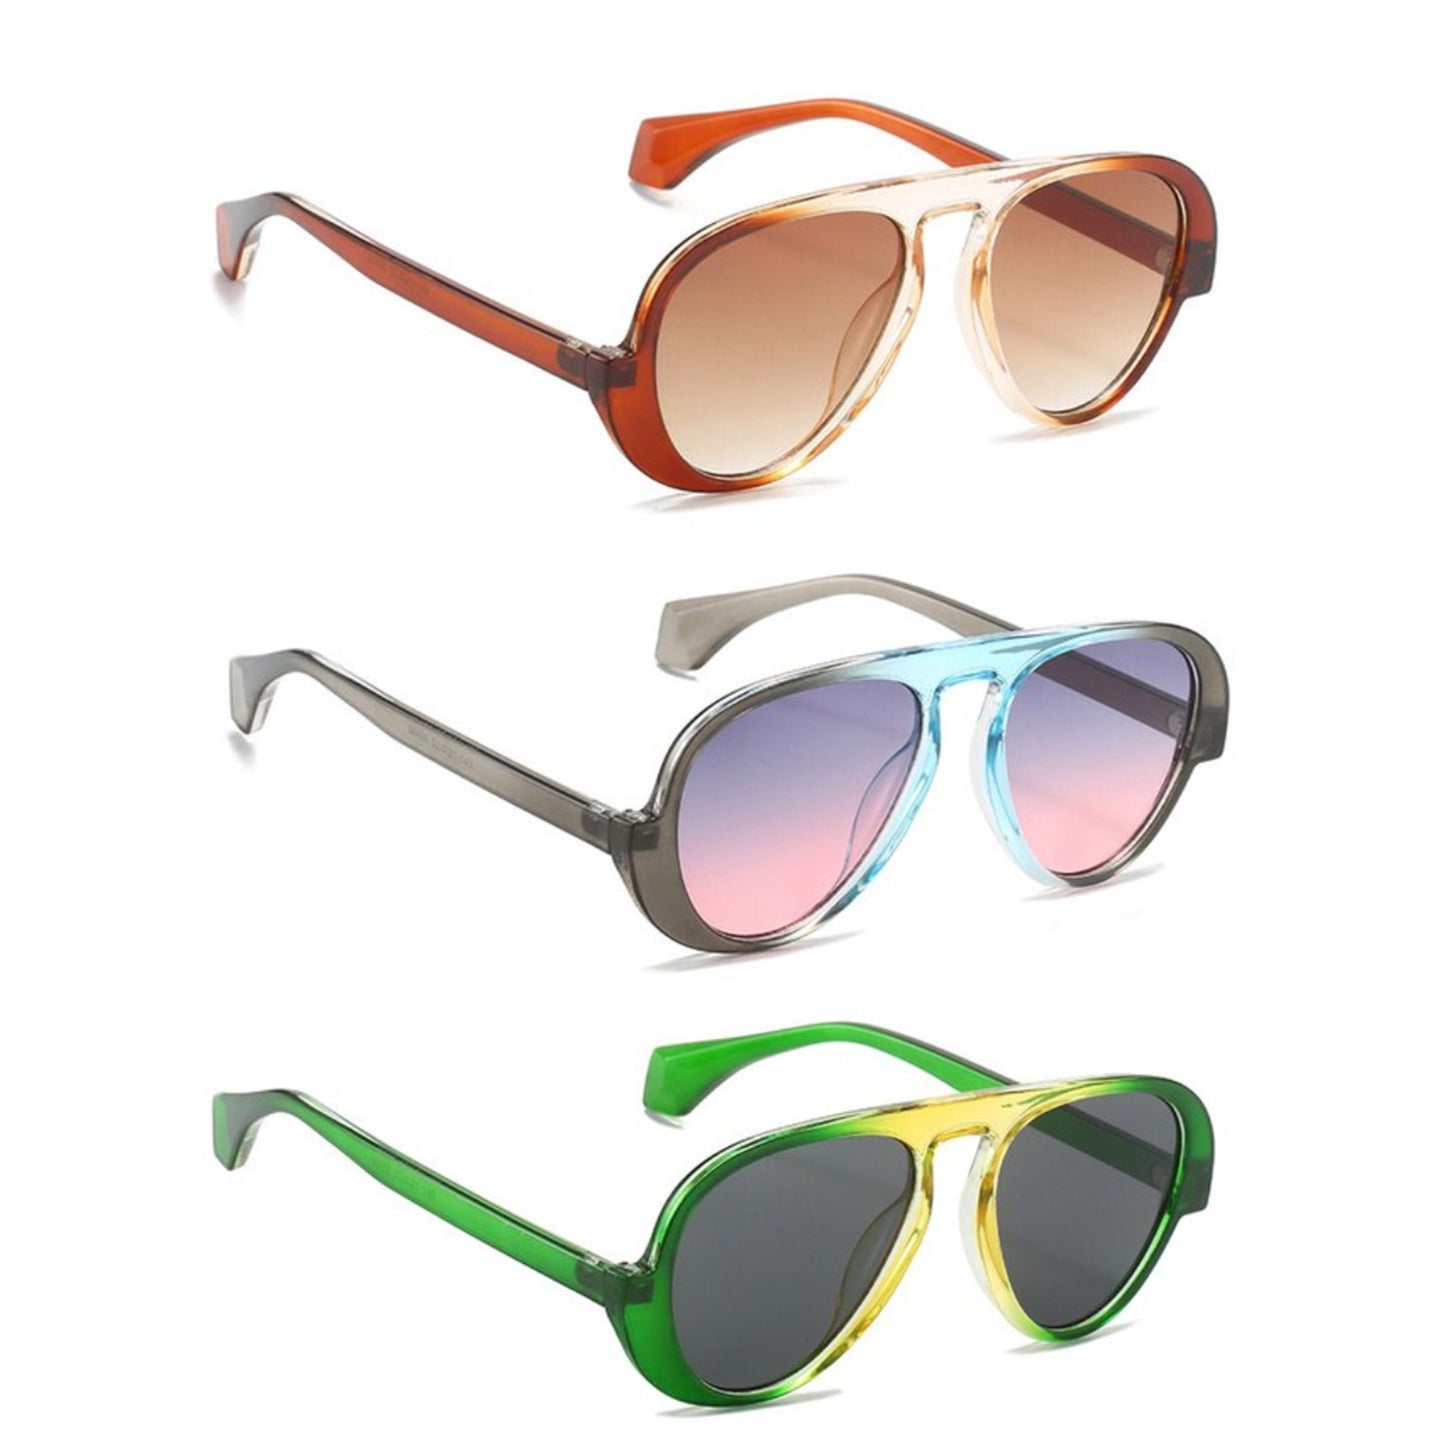 “Rad Skis” Two Tone Sunglasses